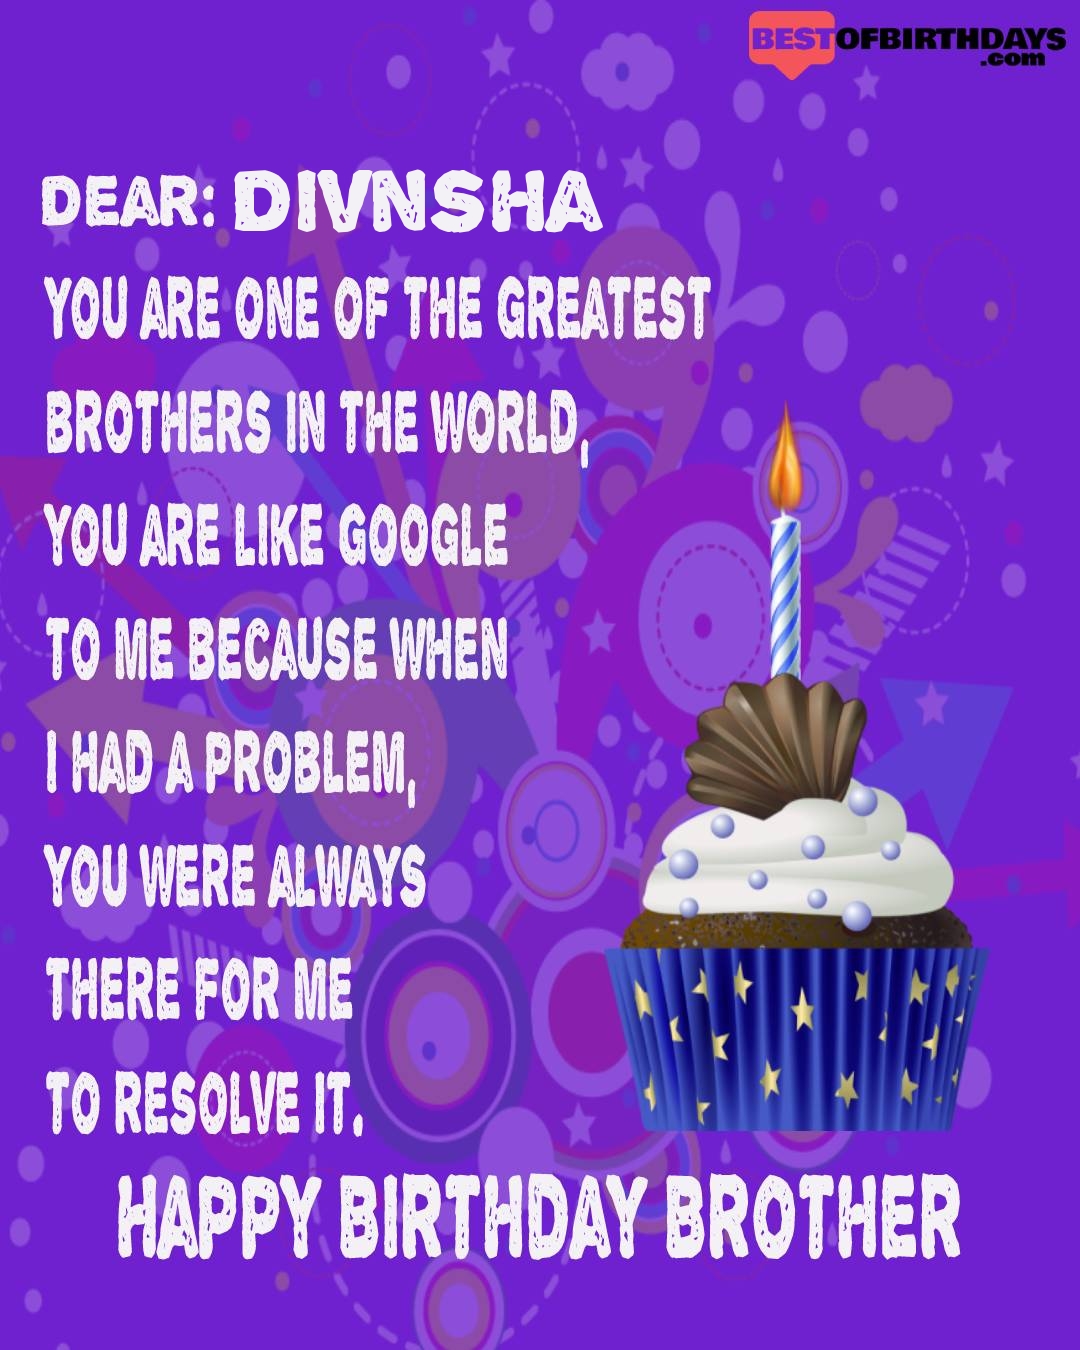 Happy birthday divnsha bhai brother bro